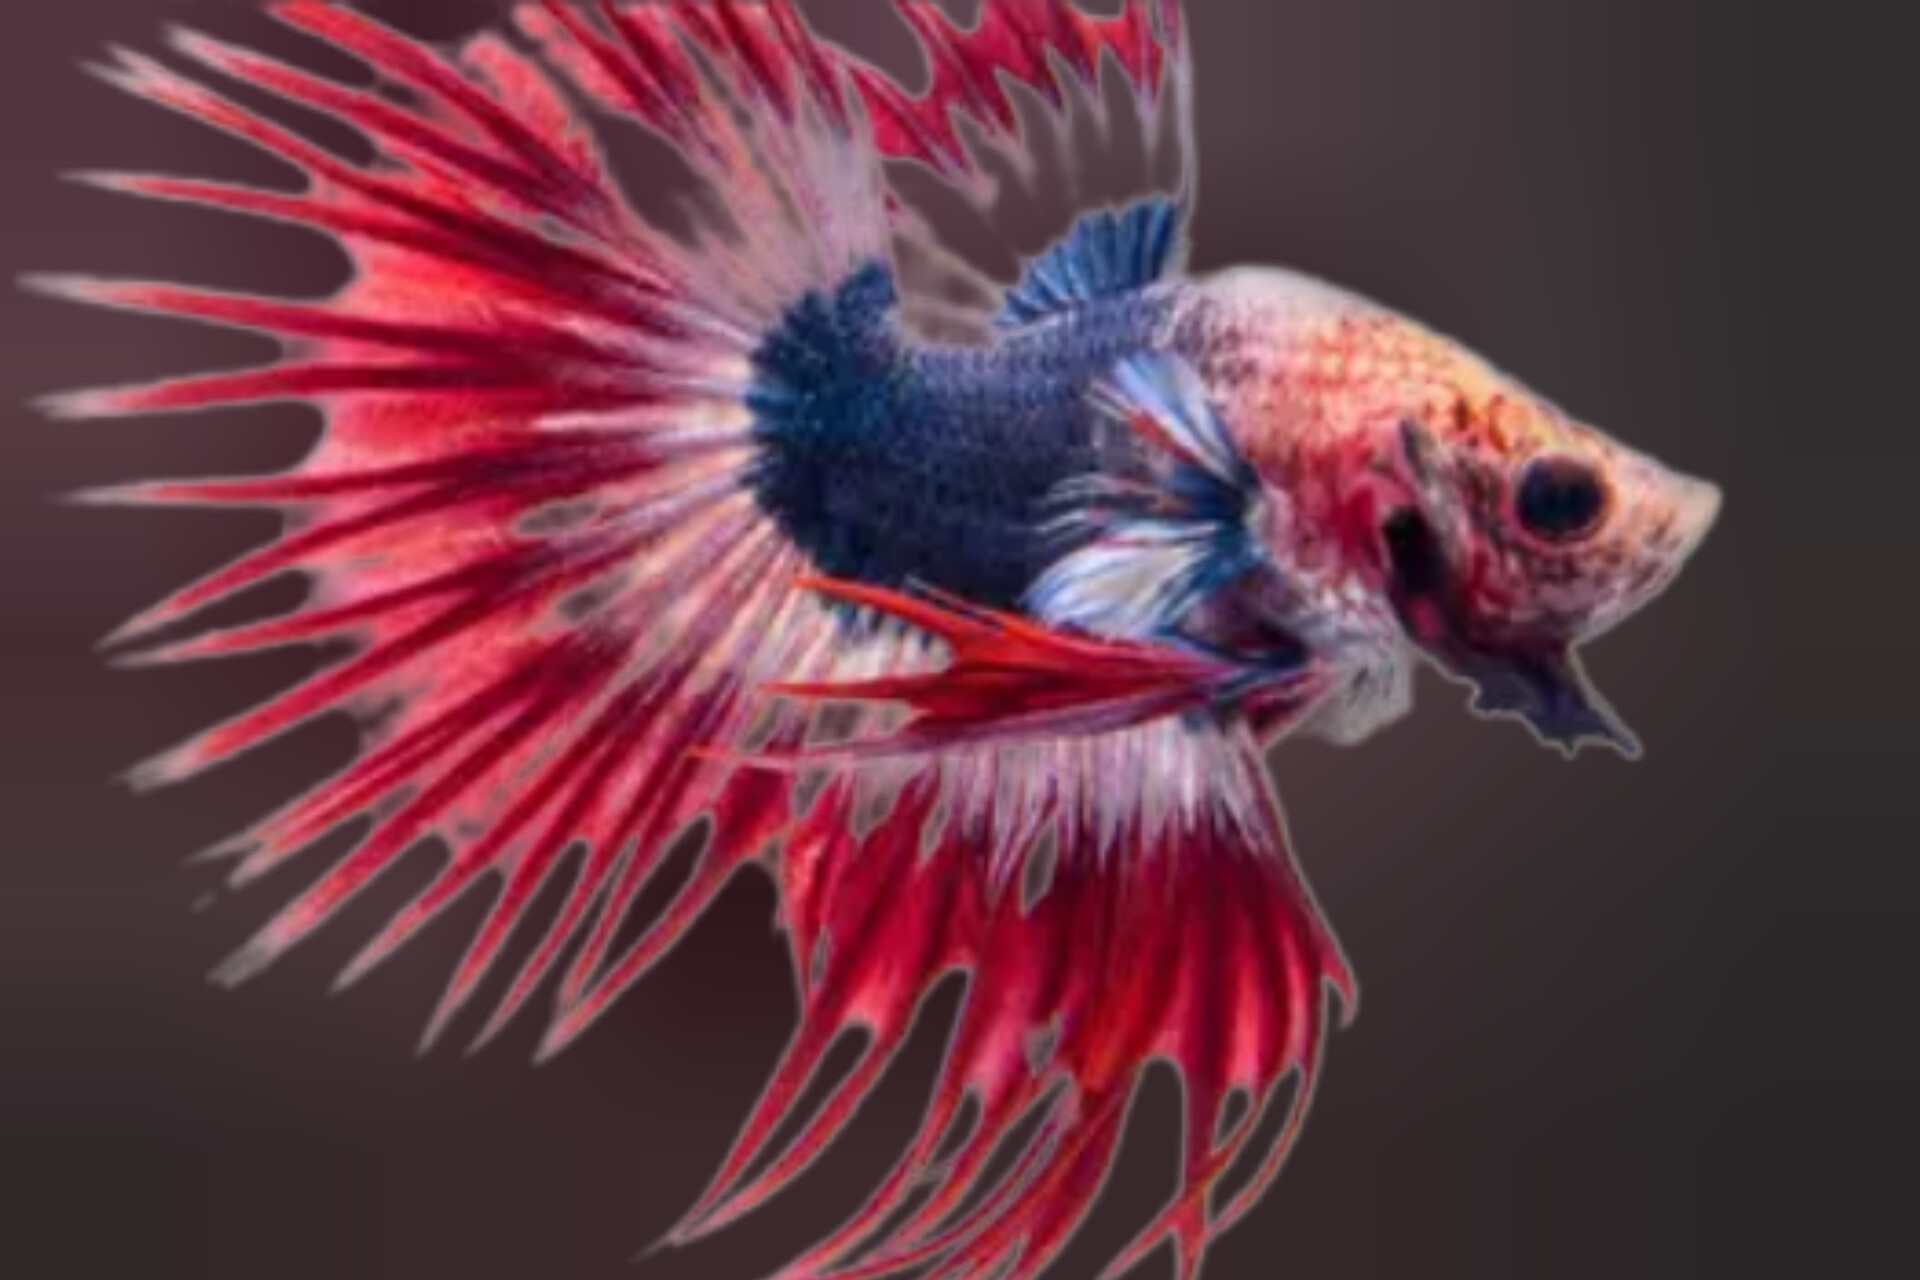 Rahasia Umur Ikan Cupang: Cara Mengetahui dengan Mudah melalui Ciri Fisik dan Perilaku